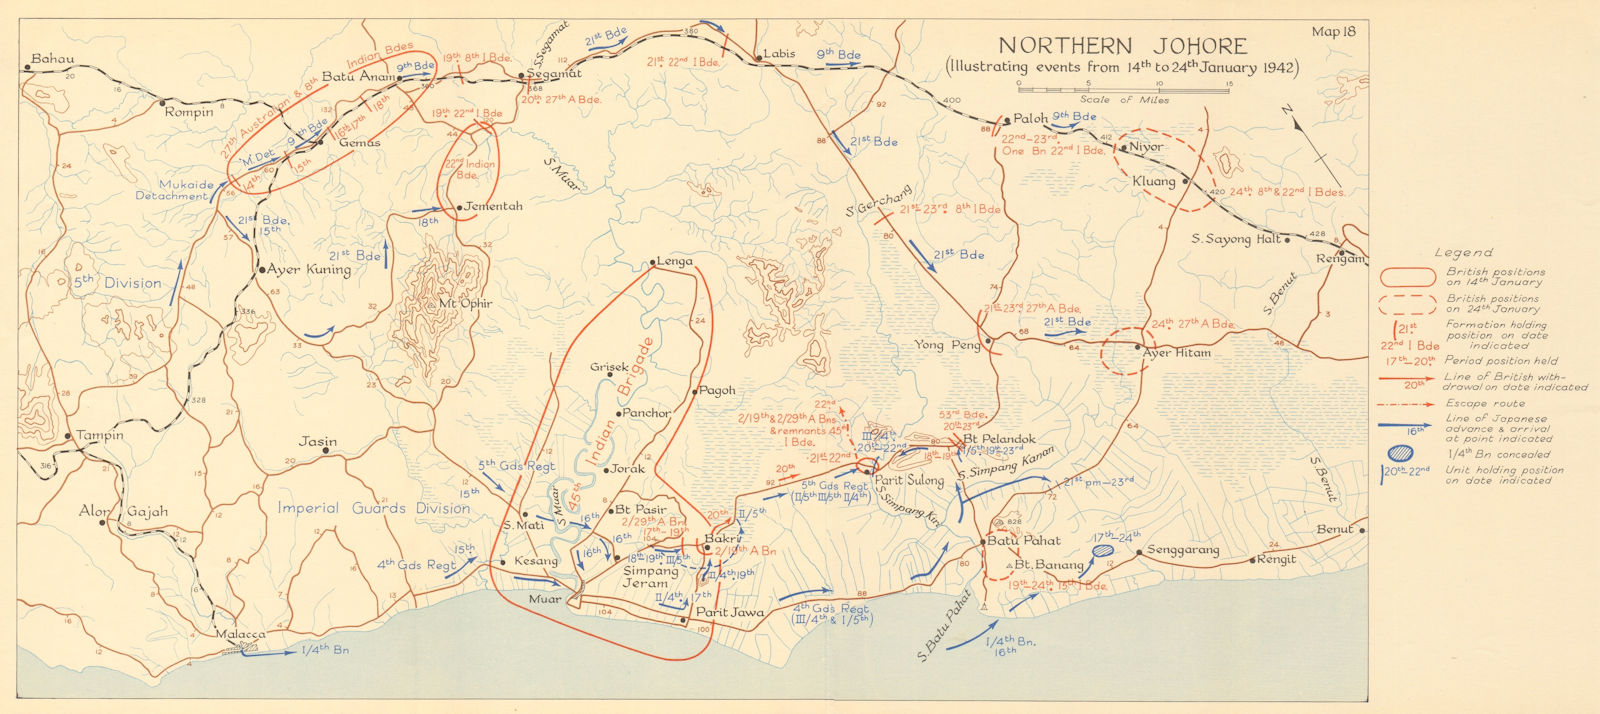 Northern Johore. Japanese invasion of Malaya. 14th to 24th January 1942 1957 map